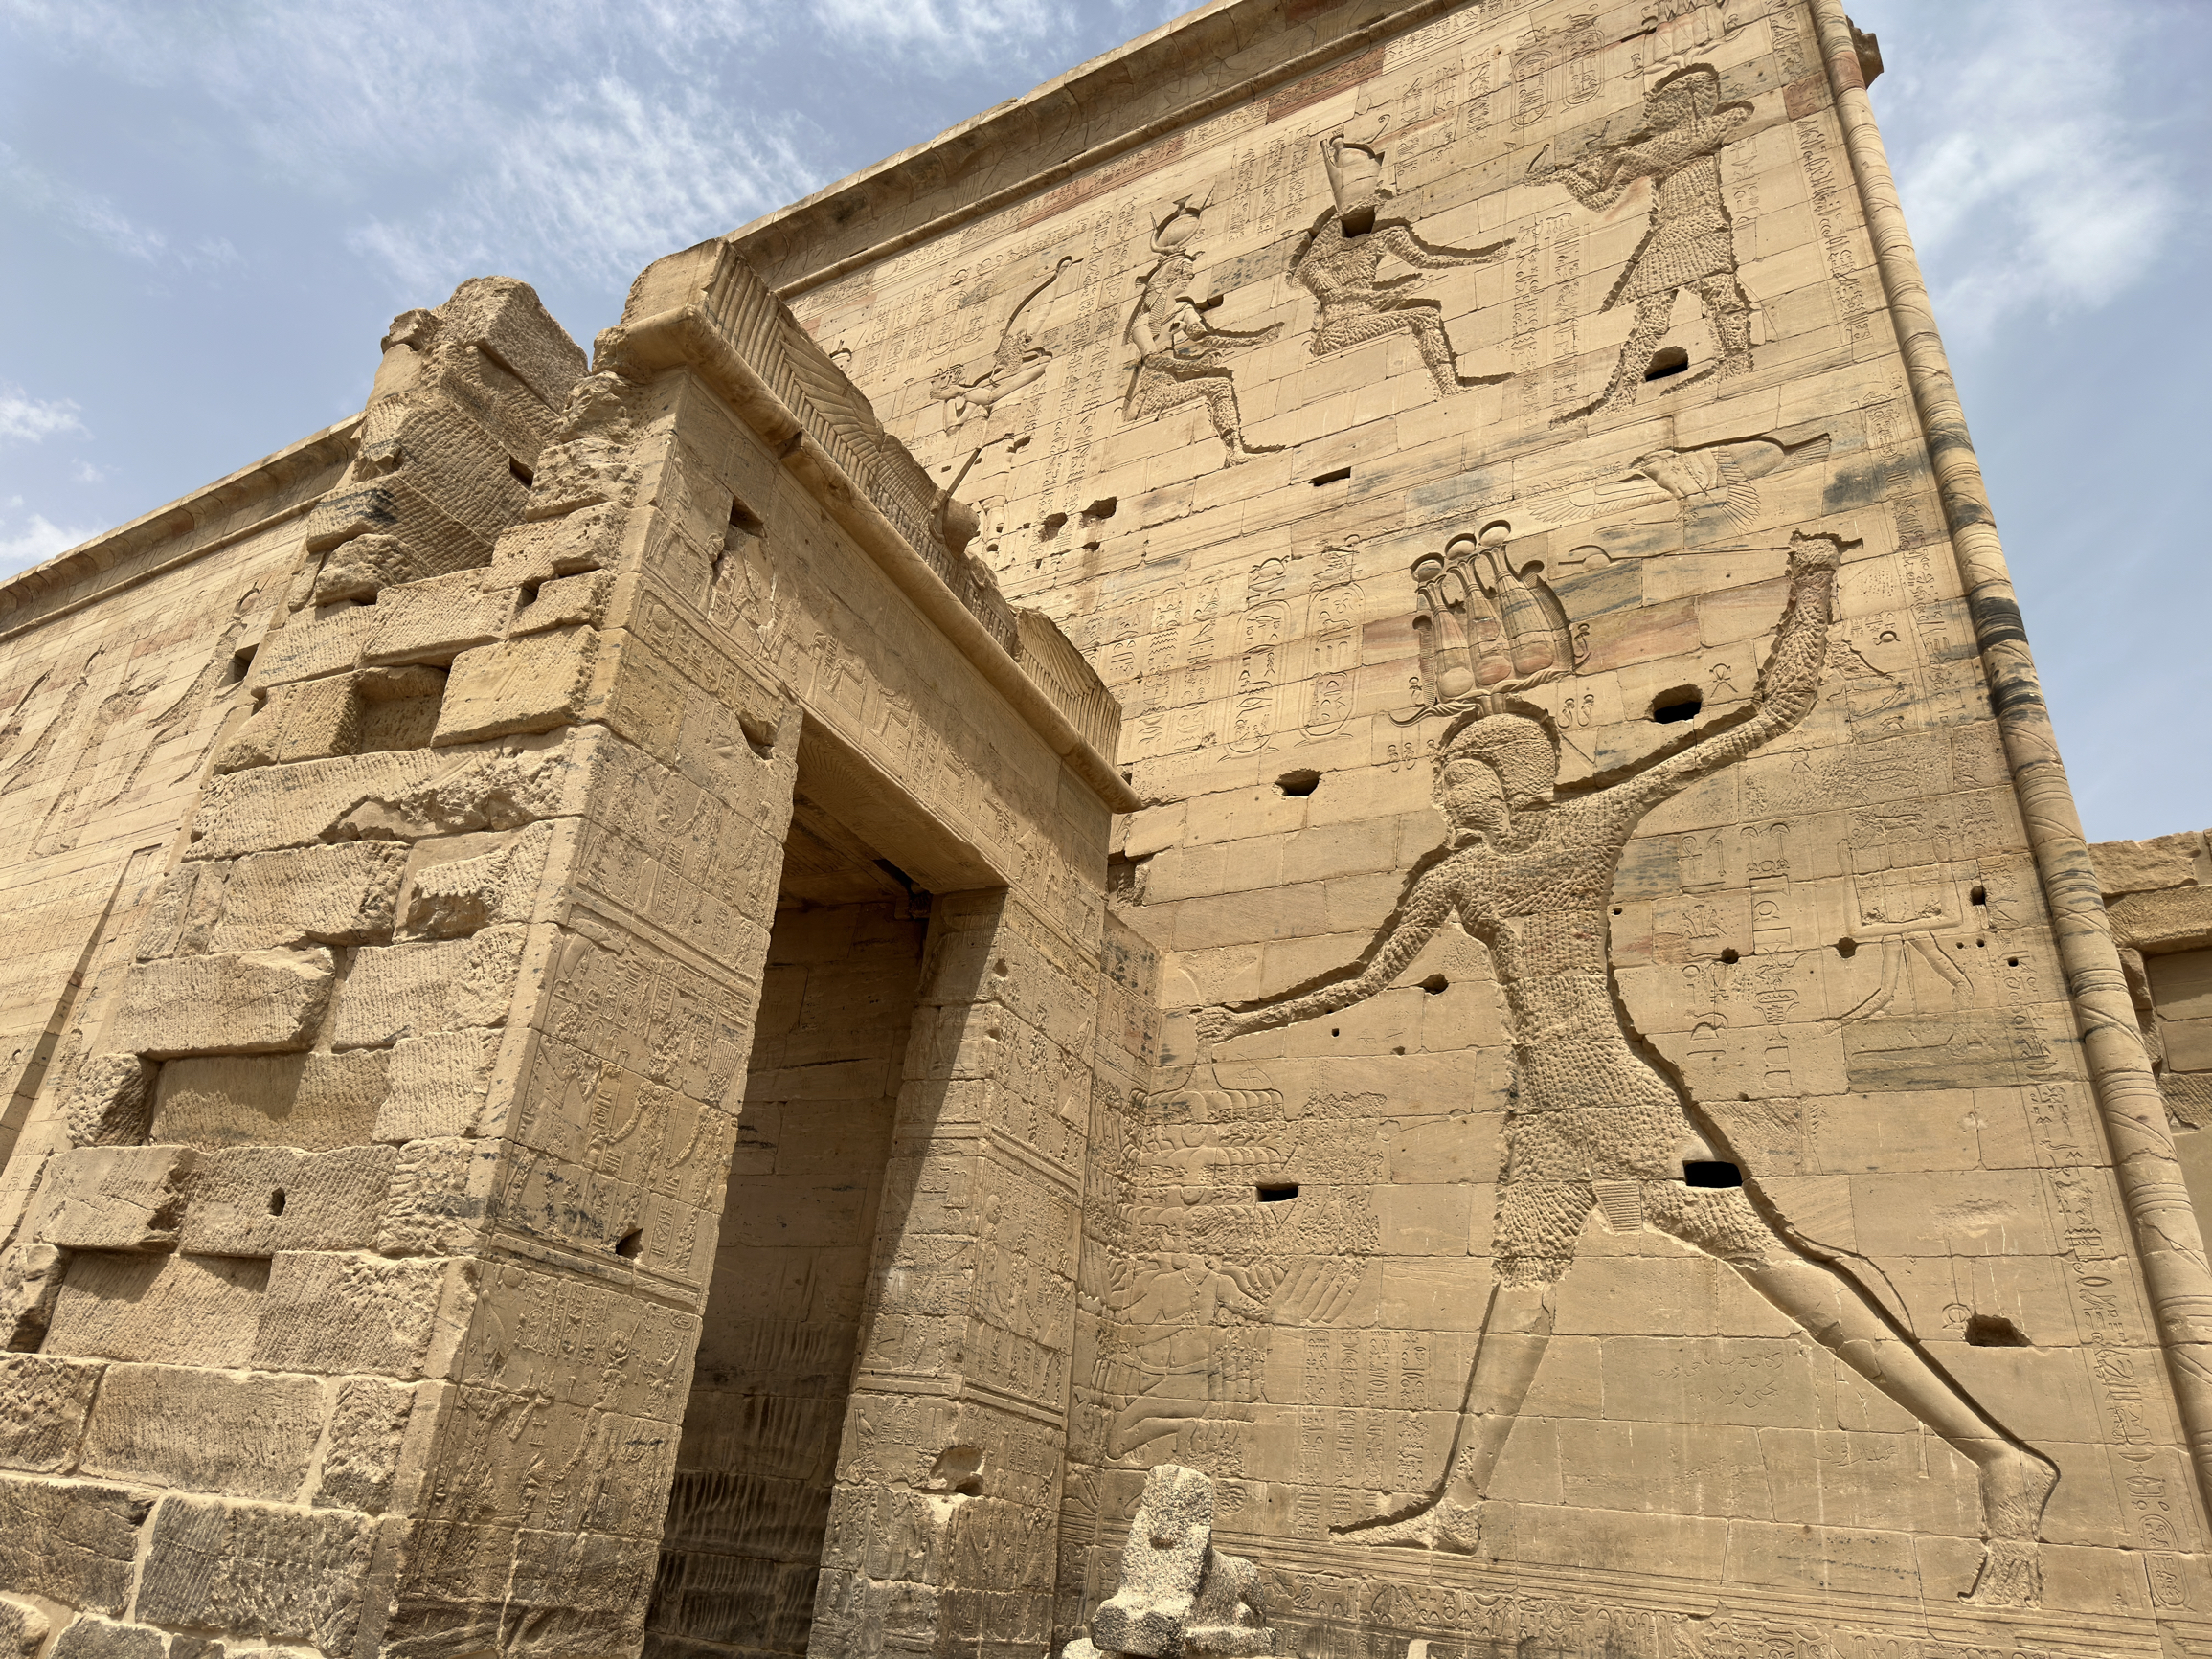 Day-2 阿布辛贝 有60个老婆的拉美西斯二世 ——“埃及第一深情”见了✔️ #埃及博物馆之旅 #